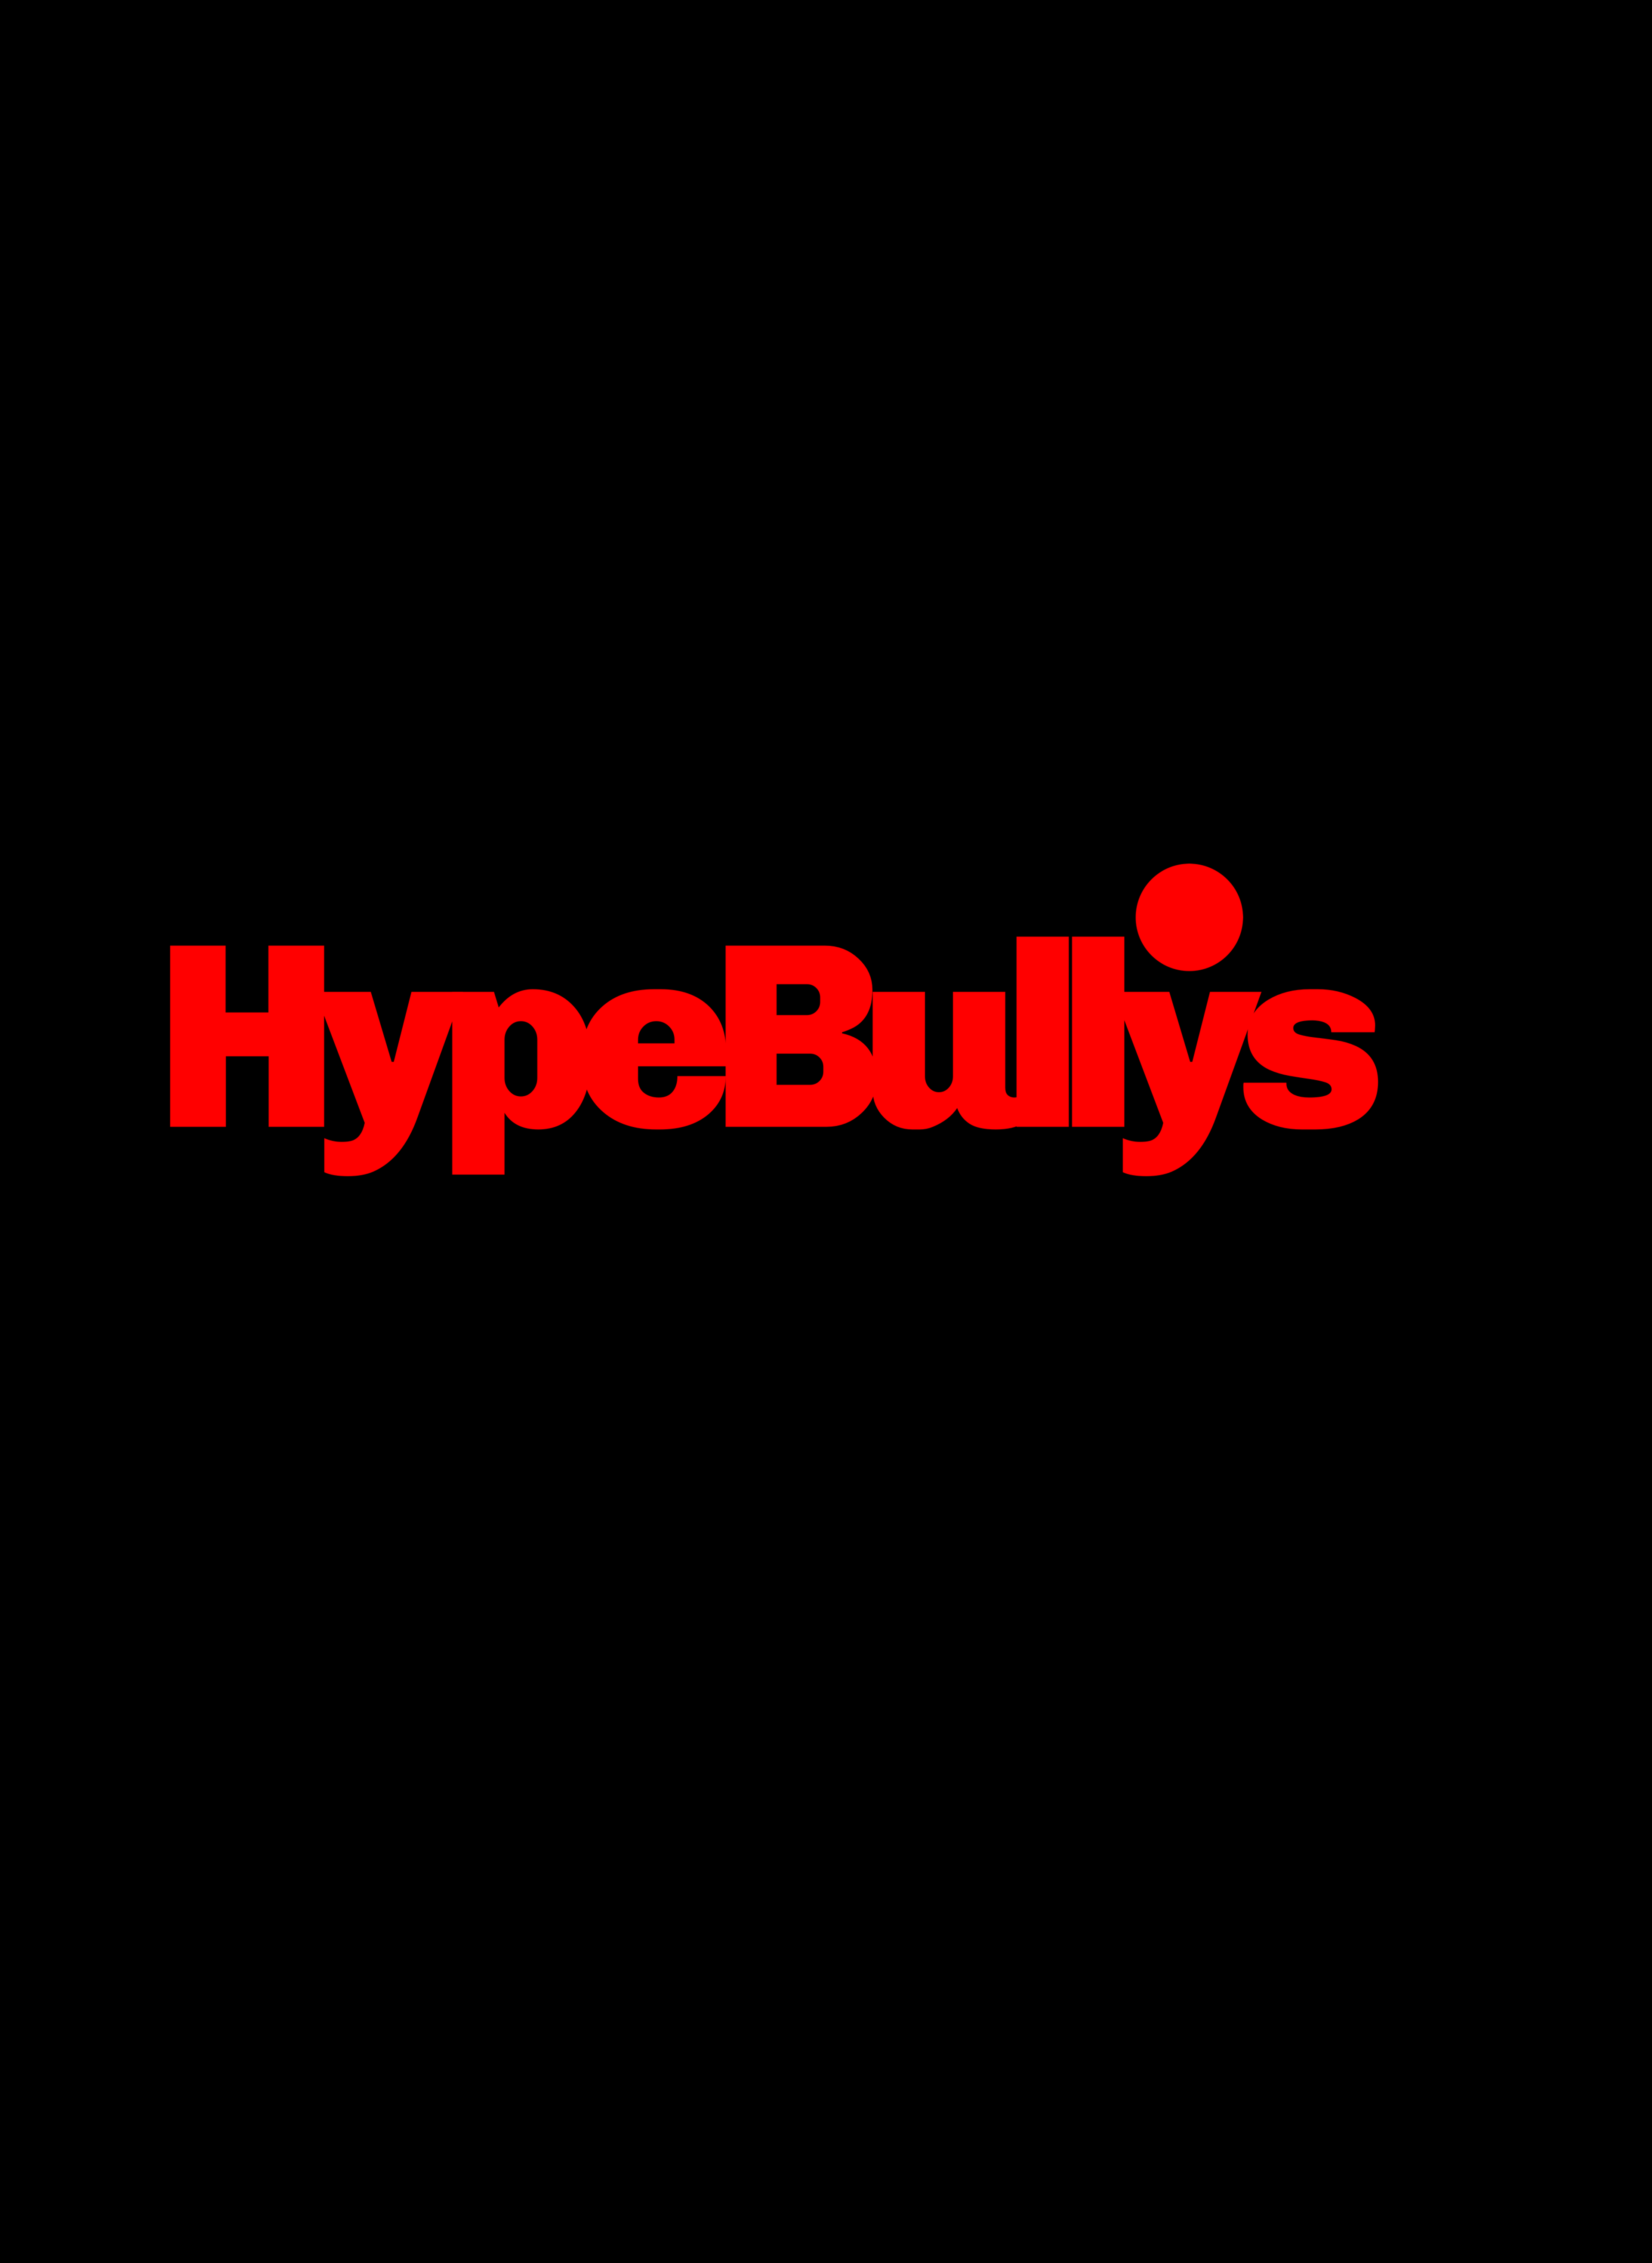 HypeBullys